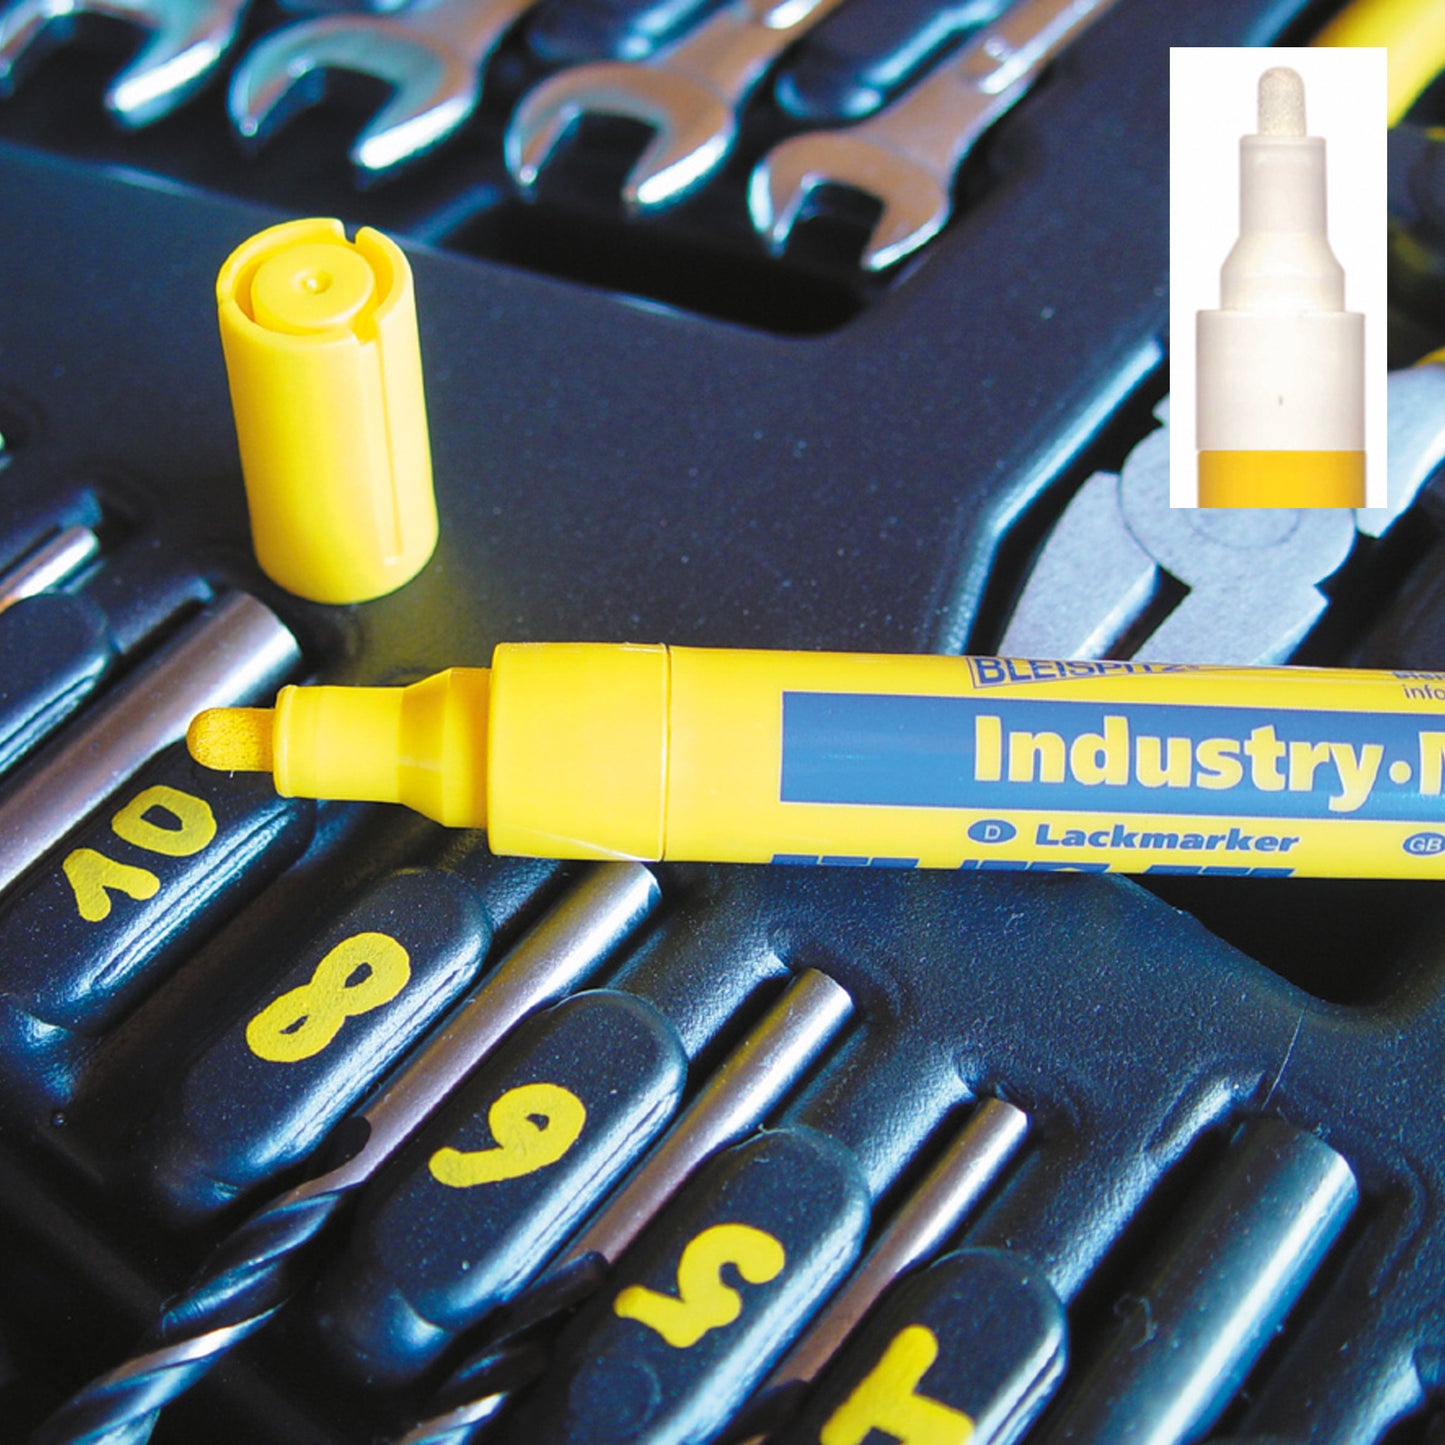 Bleispitz® Industry-Marker